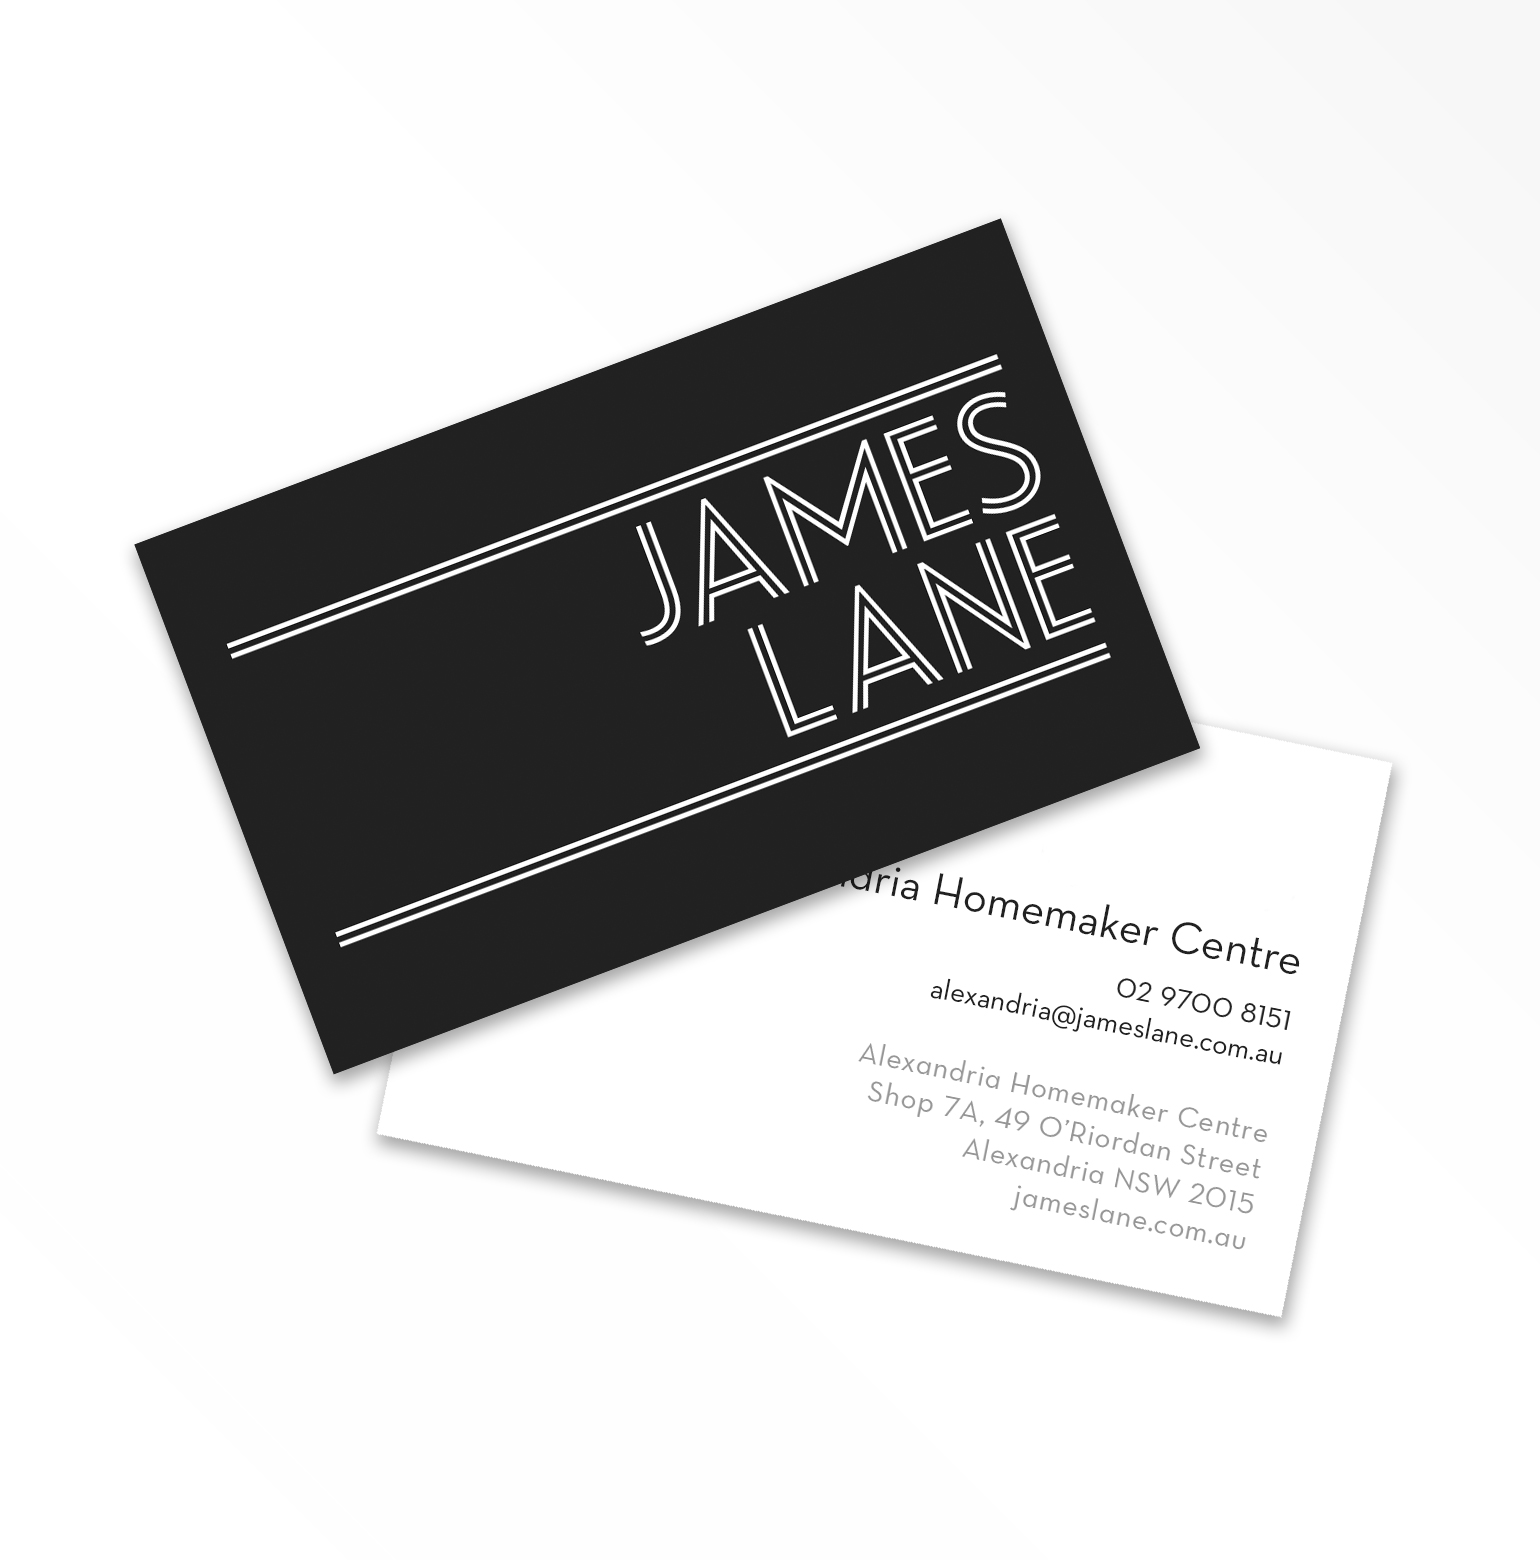 James Lane Business Cards